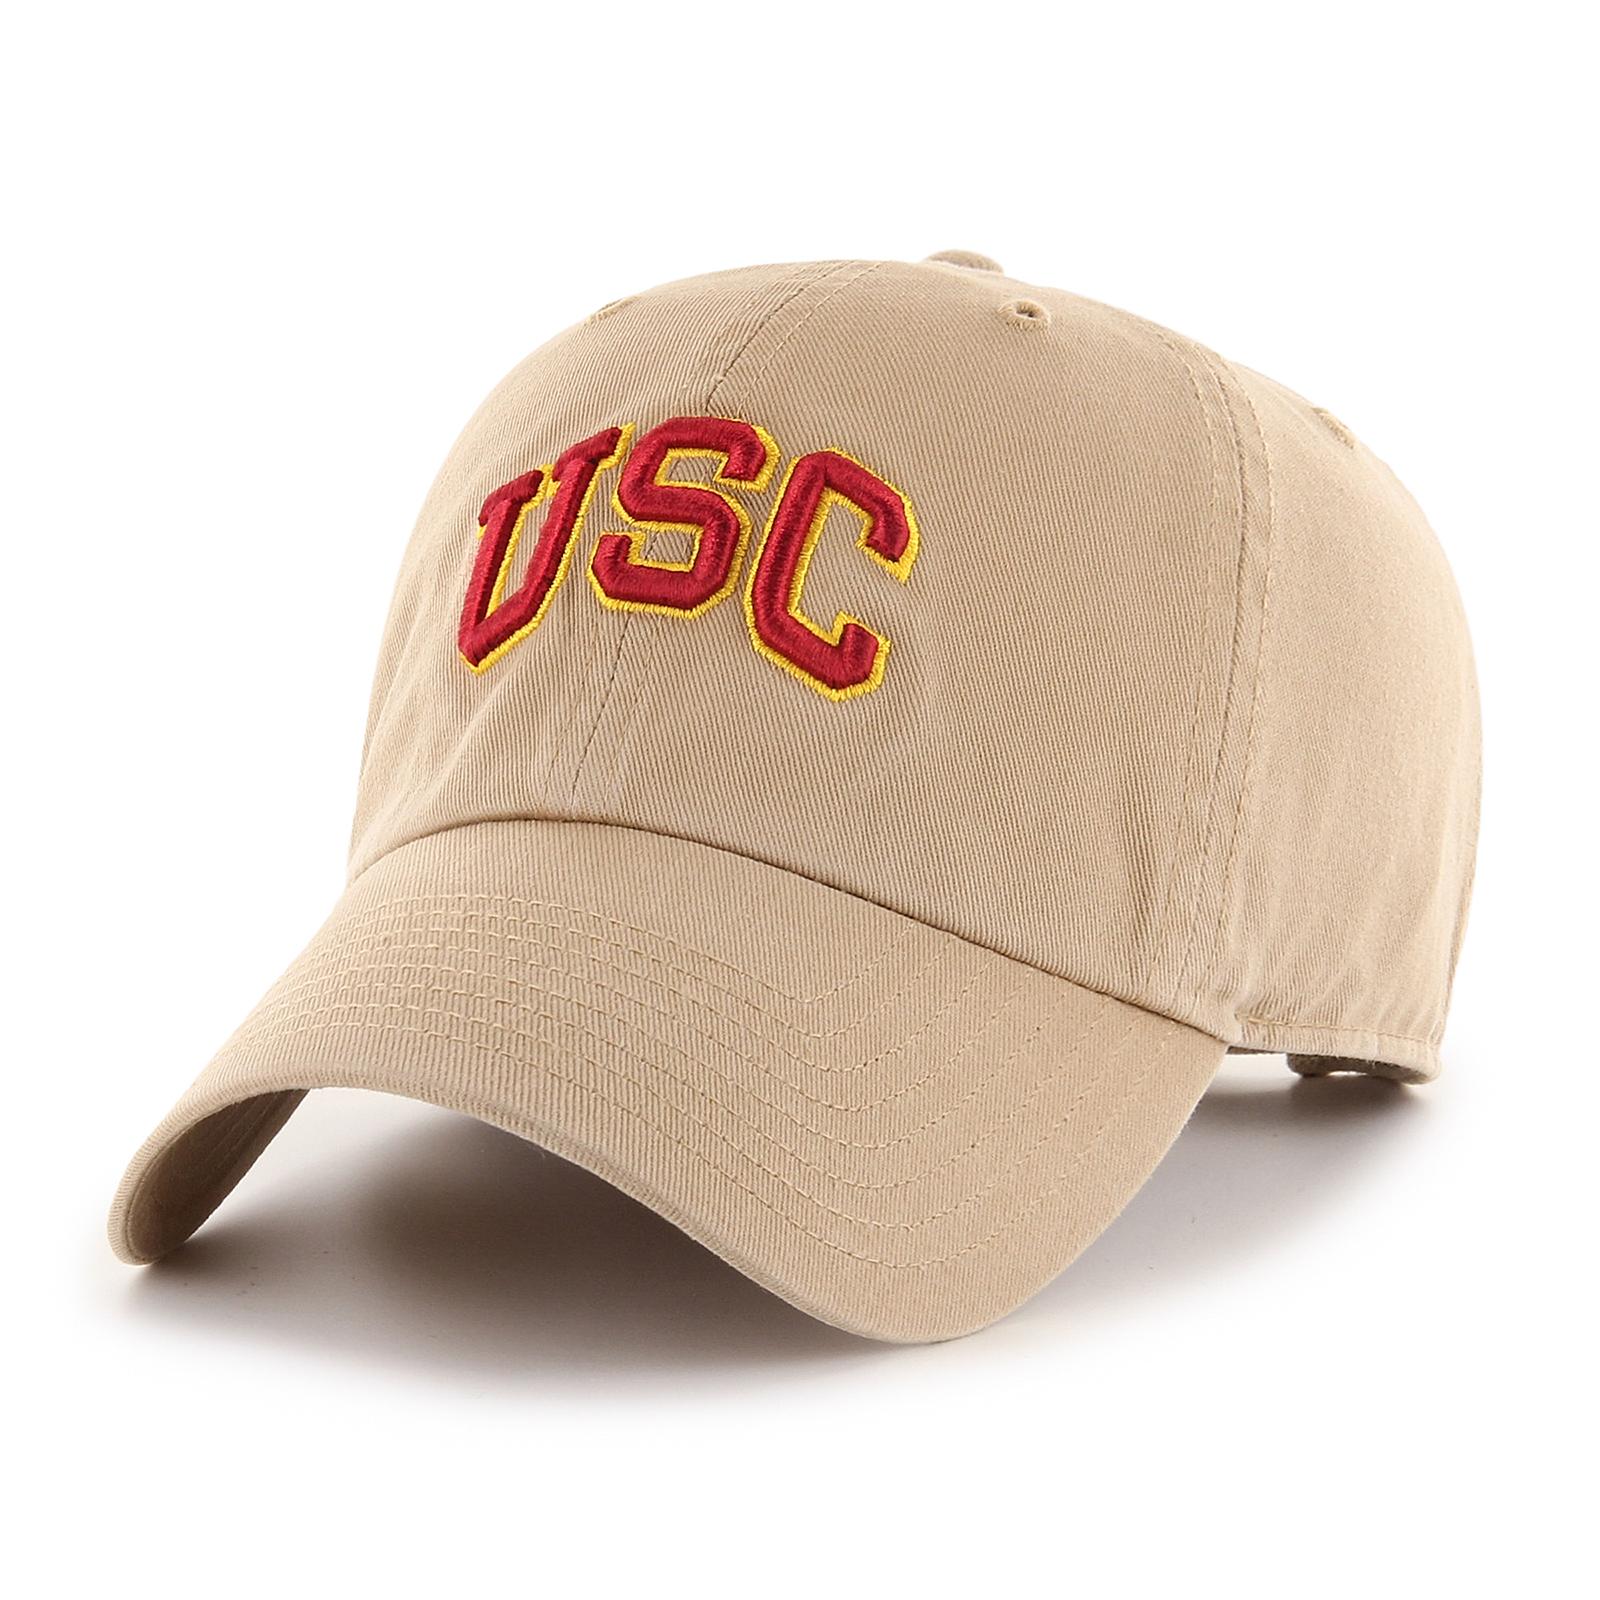 USC SO CAL TROJANS '47 CLEAN UP — LOCAL FIXTURE